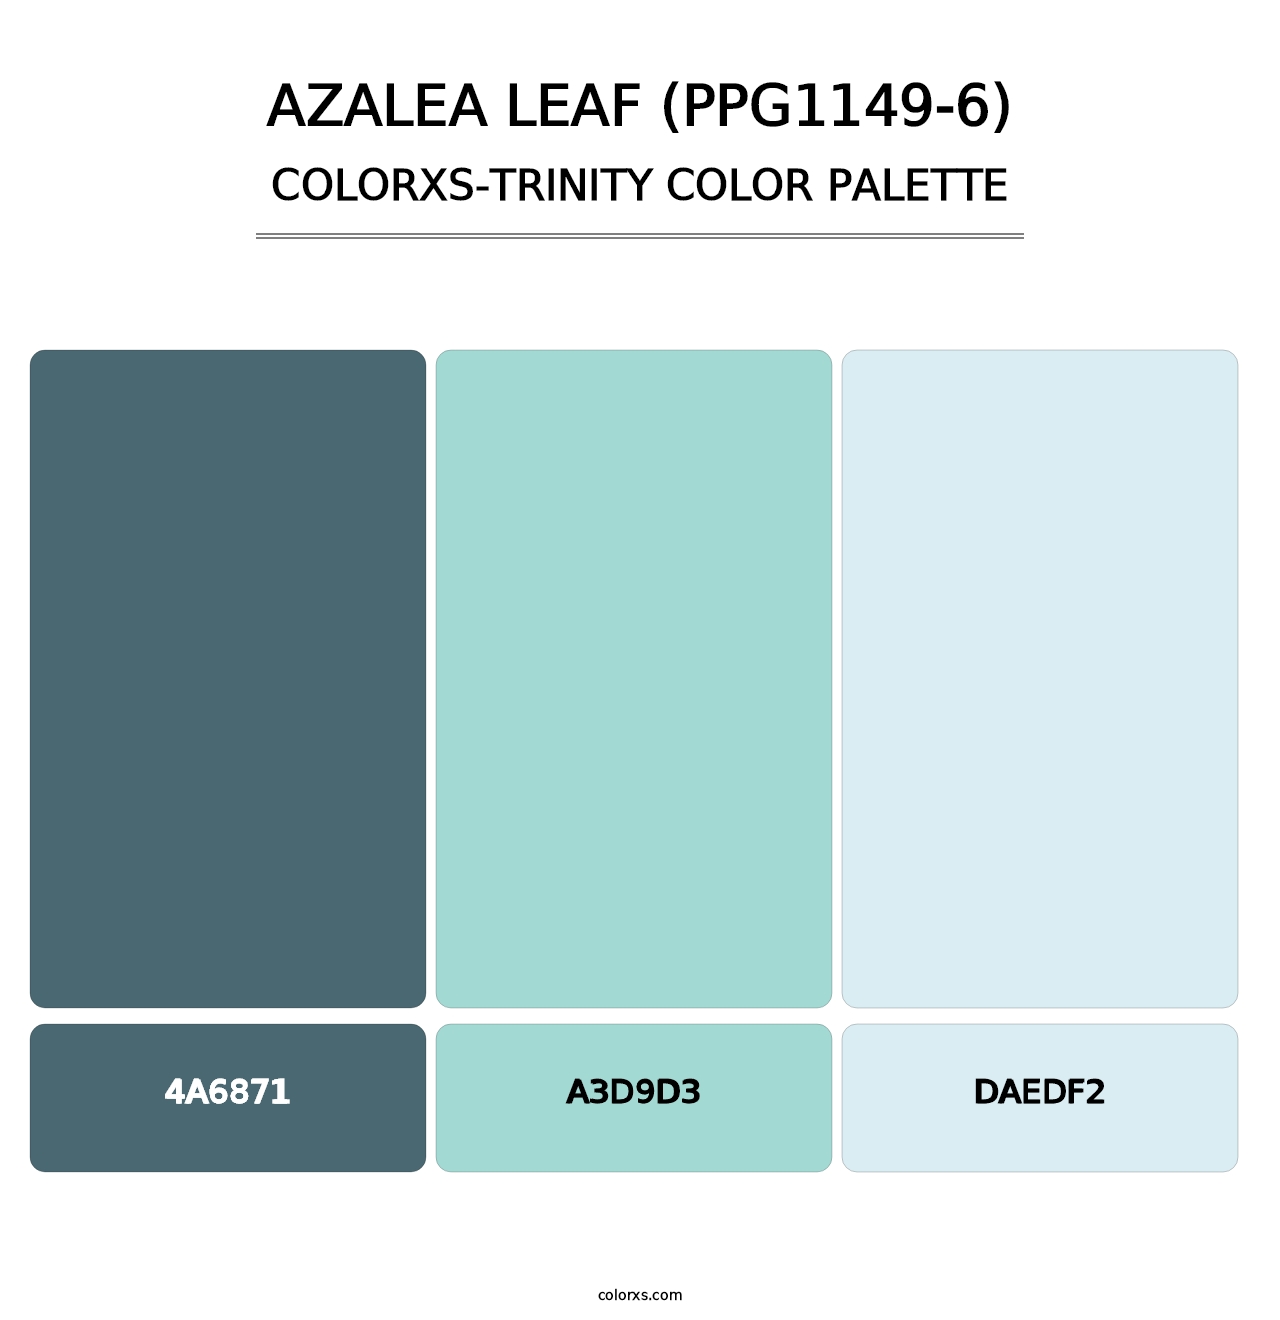 Azalea Leaf (PPG1149-6) - Colorxs Trinity Palette